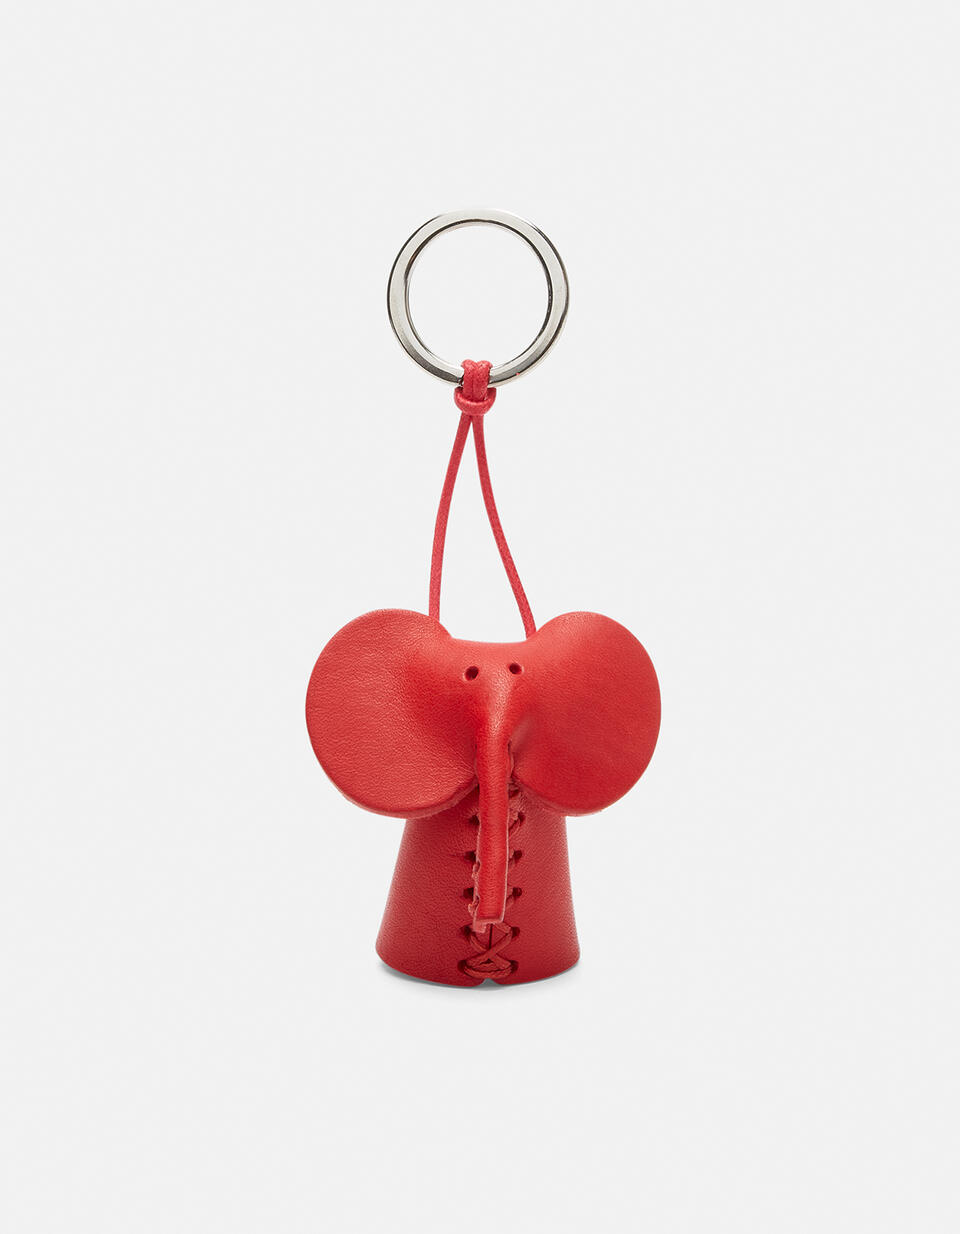 Elefant  Leather keychain - Key holders - Women's Accessories | Accessories ROSSO - Key holders - Women's Accessories | AccessoriesCuoieria Fiorentina